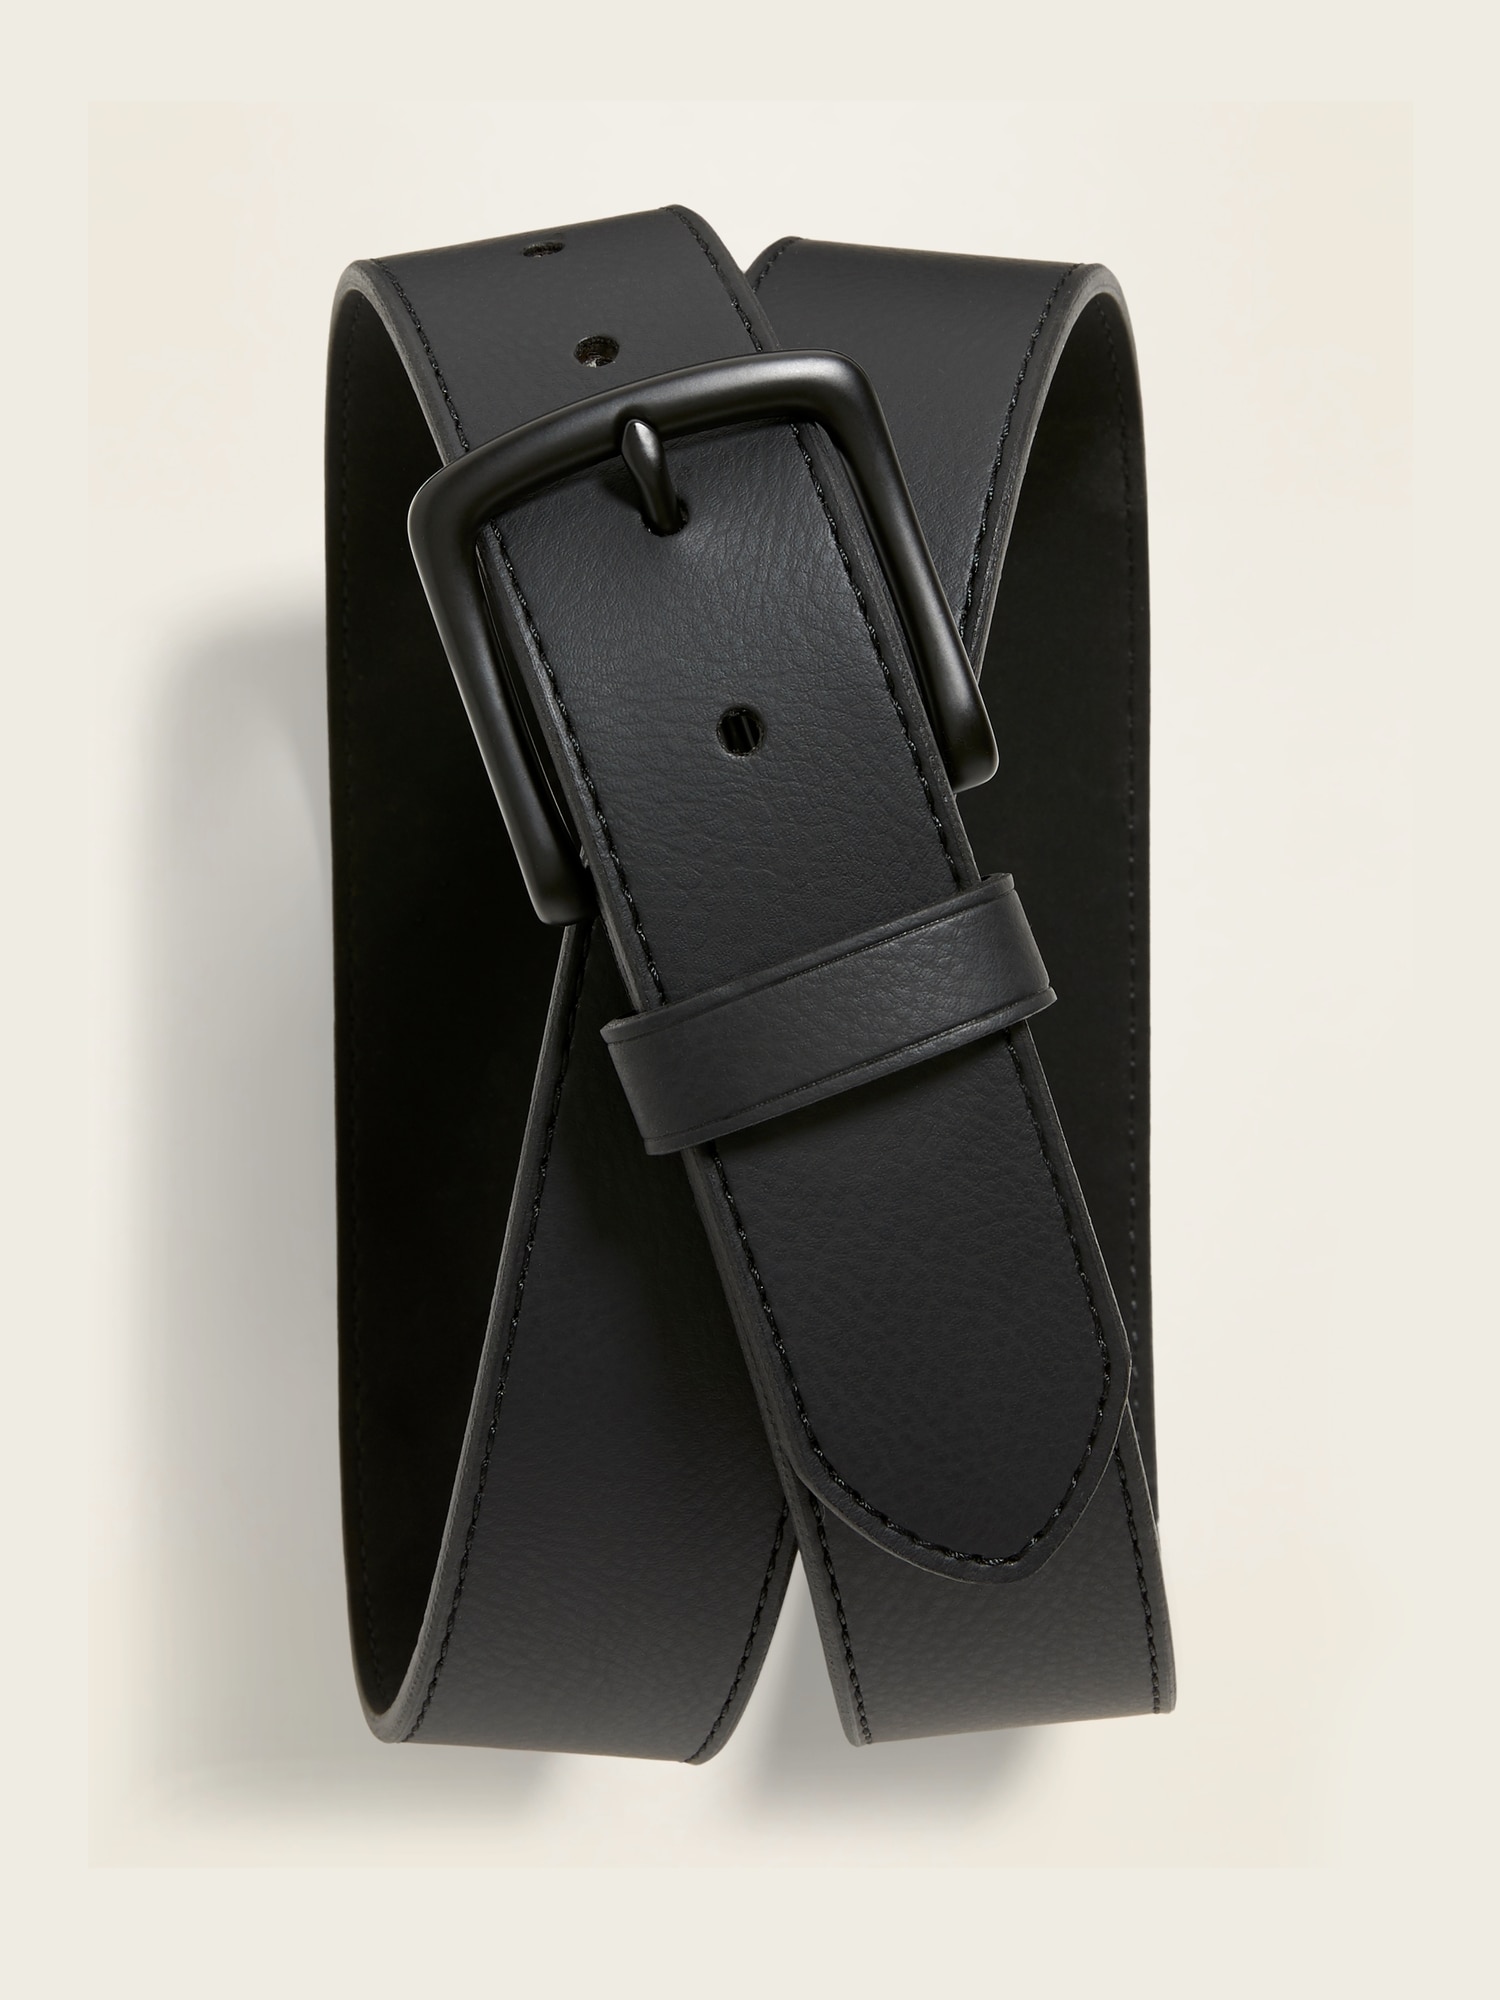 Faux-Leather Belt